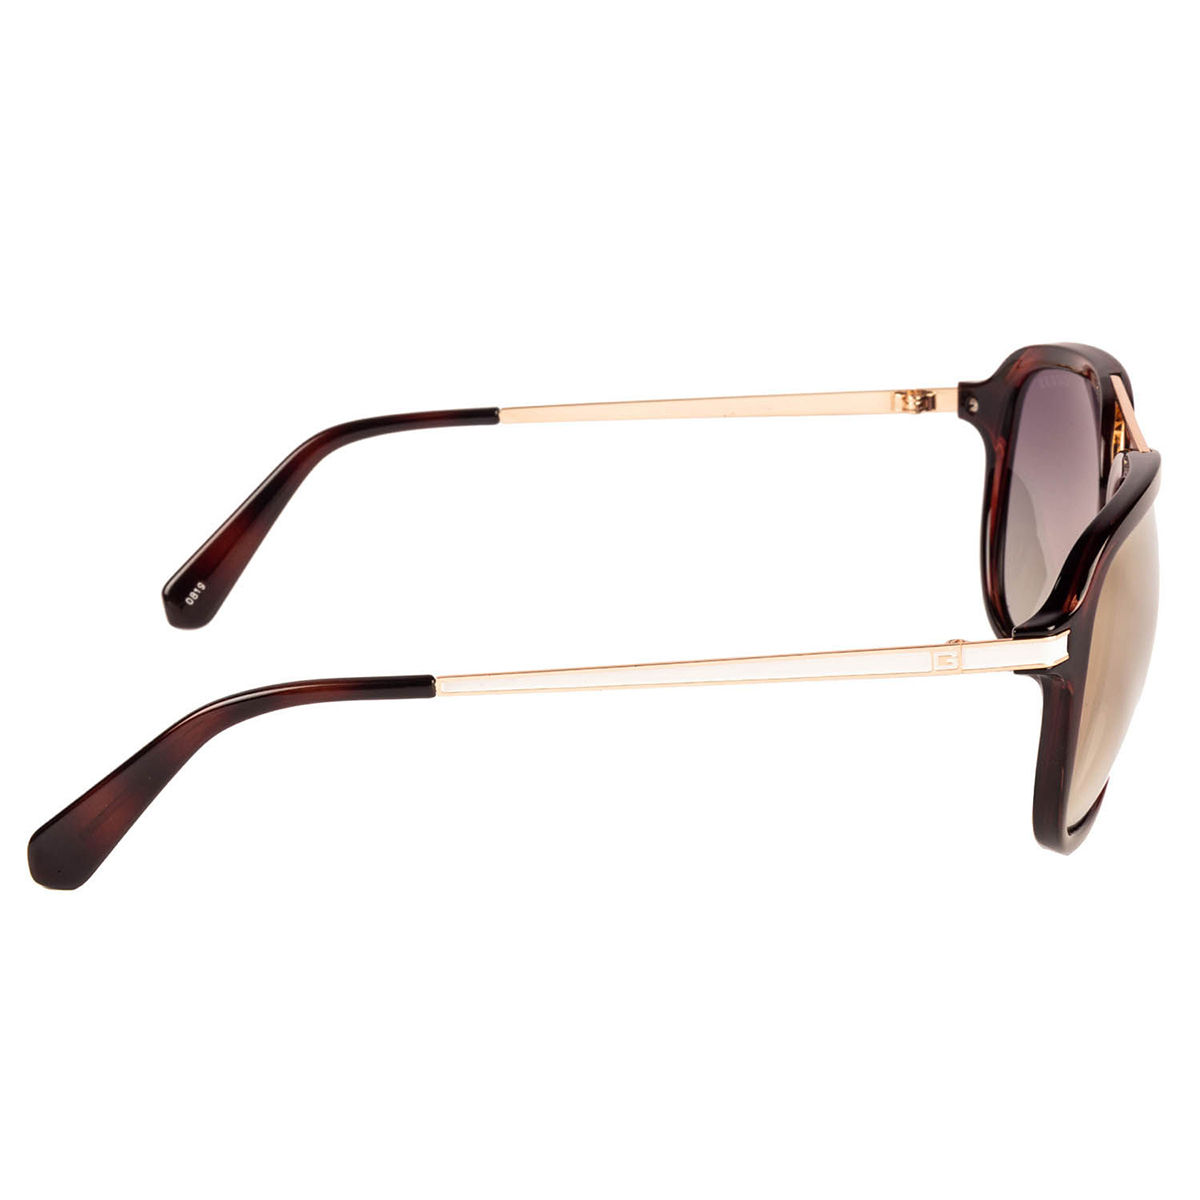 Buy Guess Sunglasses Gu698272z59 Online in UAE | Sharaf DG